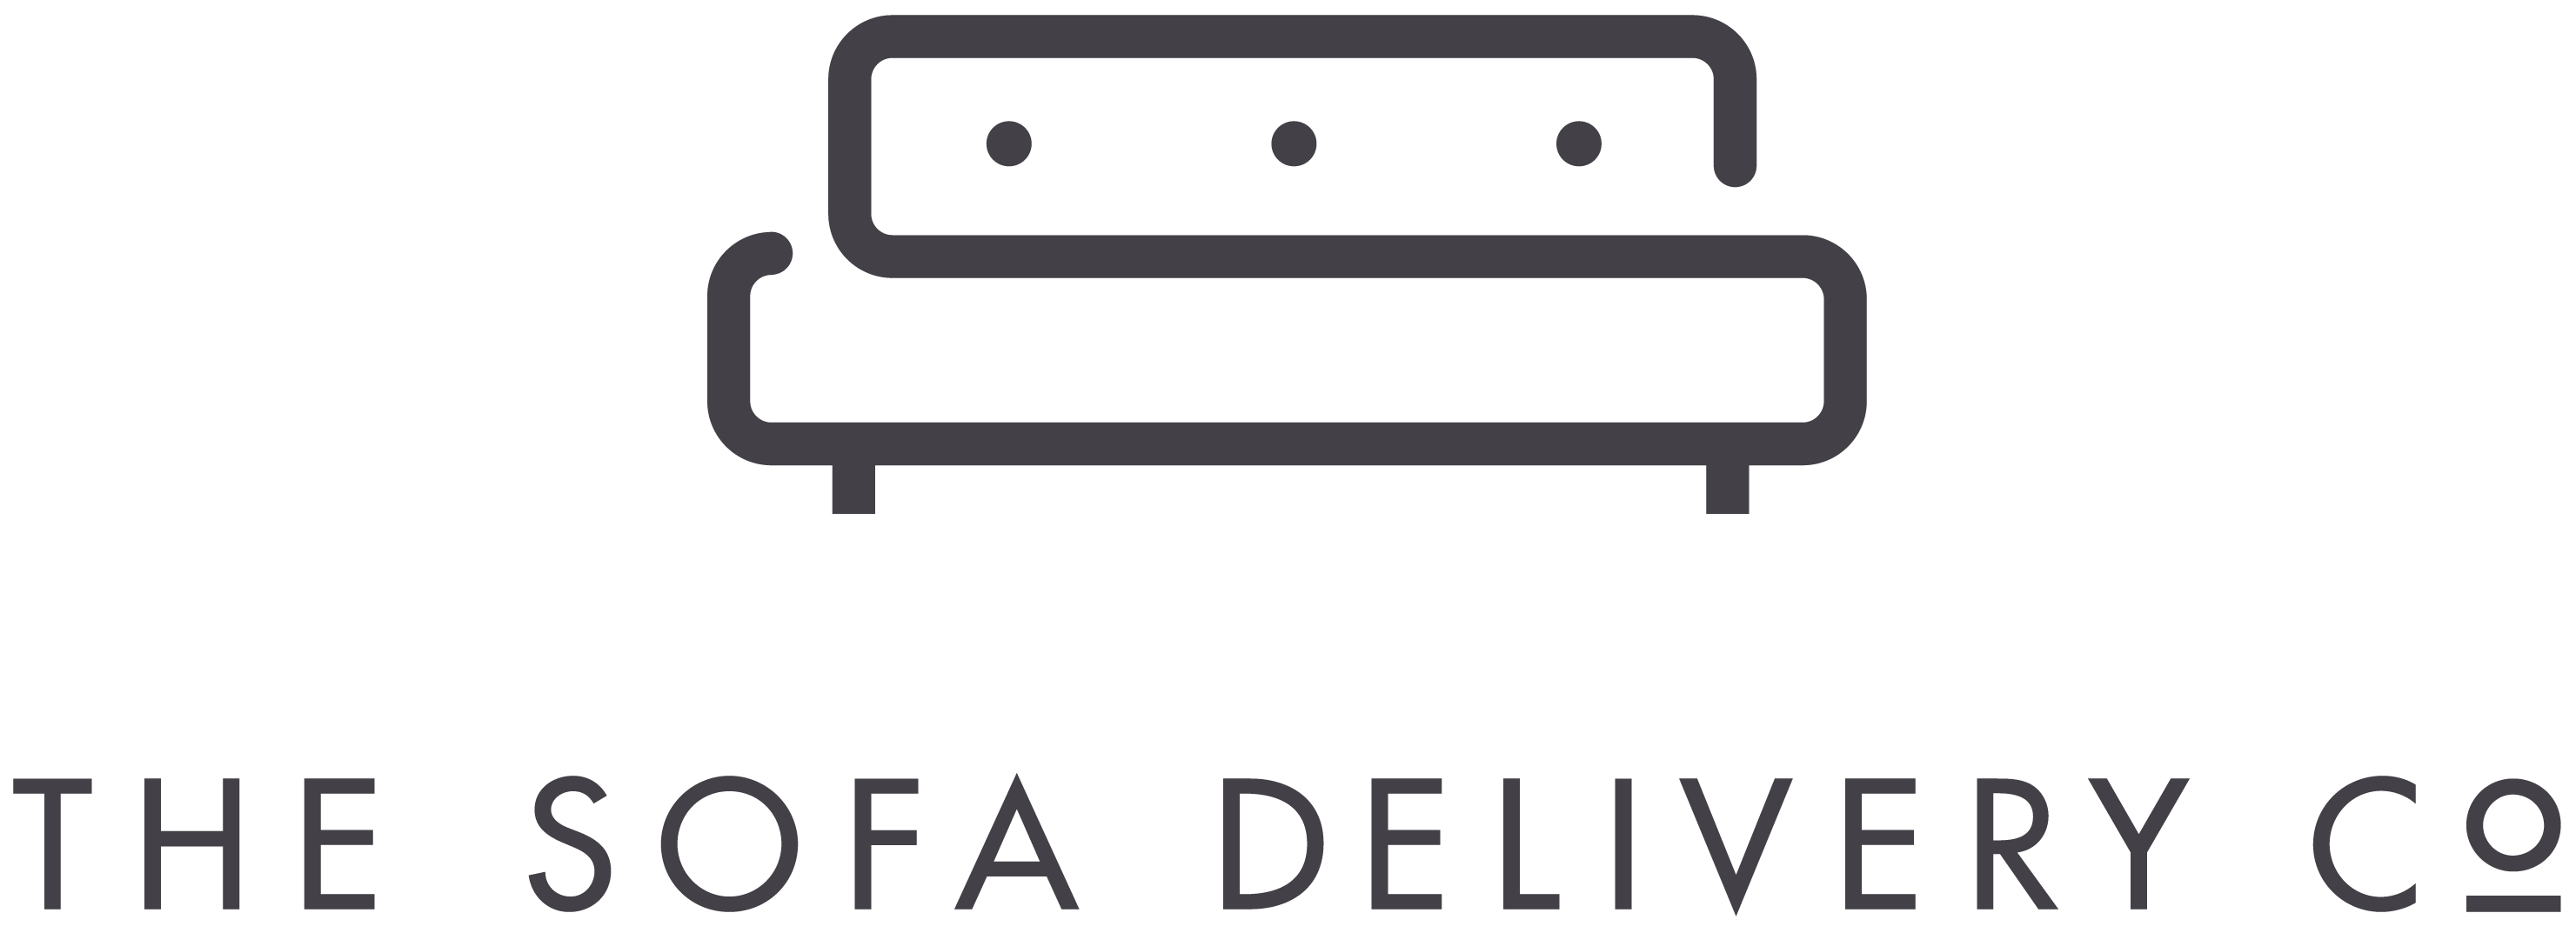 The Sofa Delivery Company